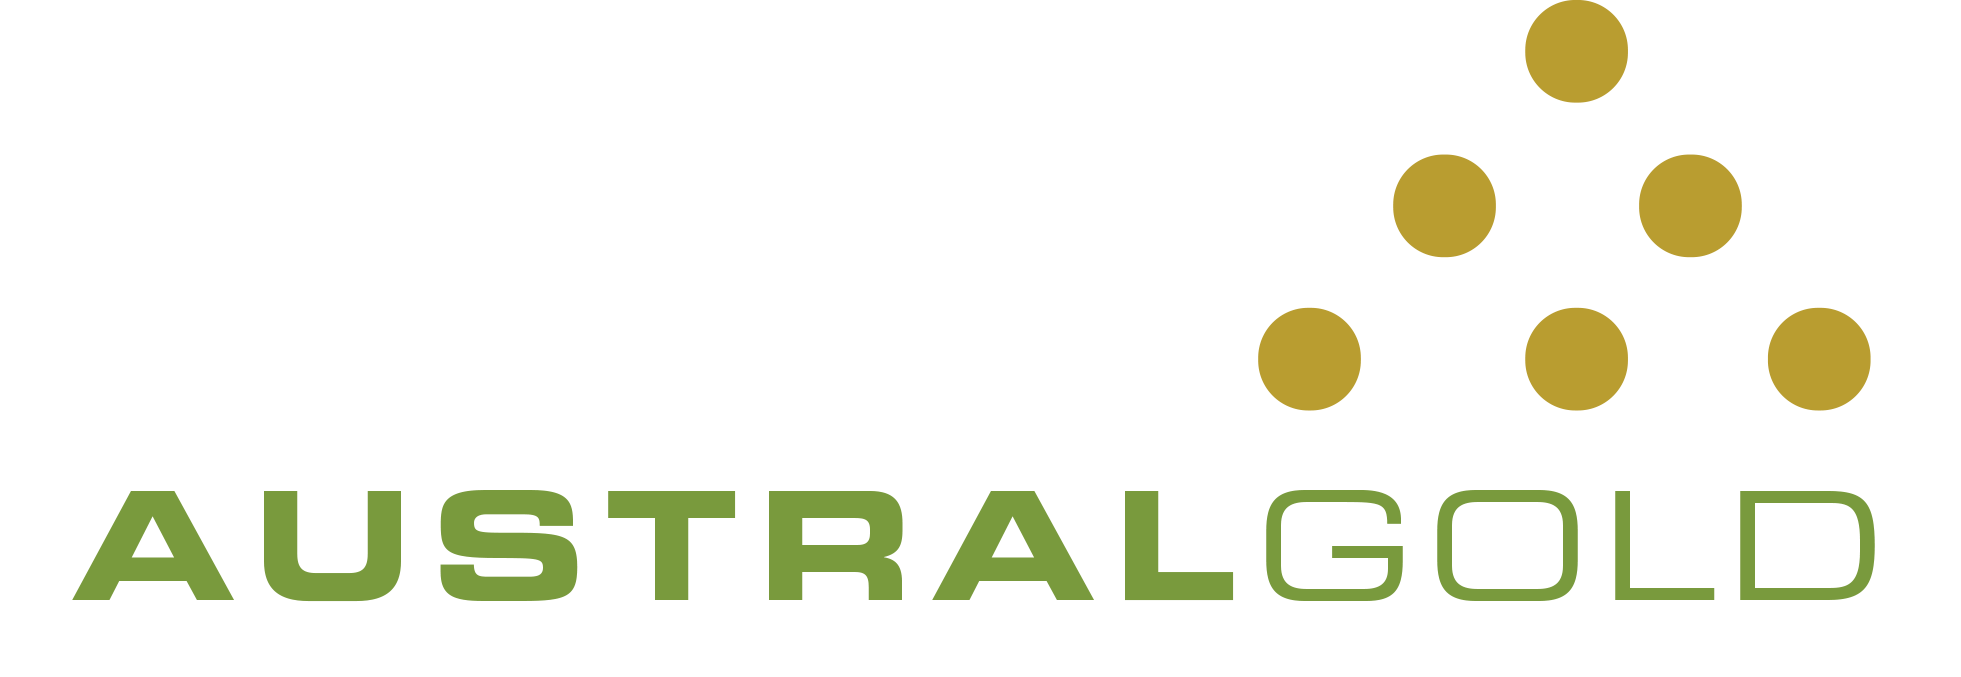 Austral Gold Limited (AGD:ASX) logo